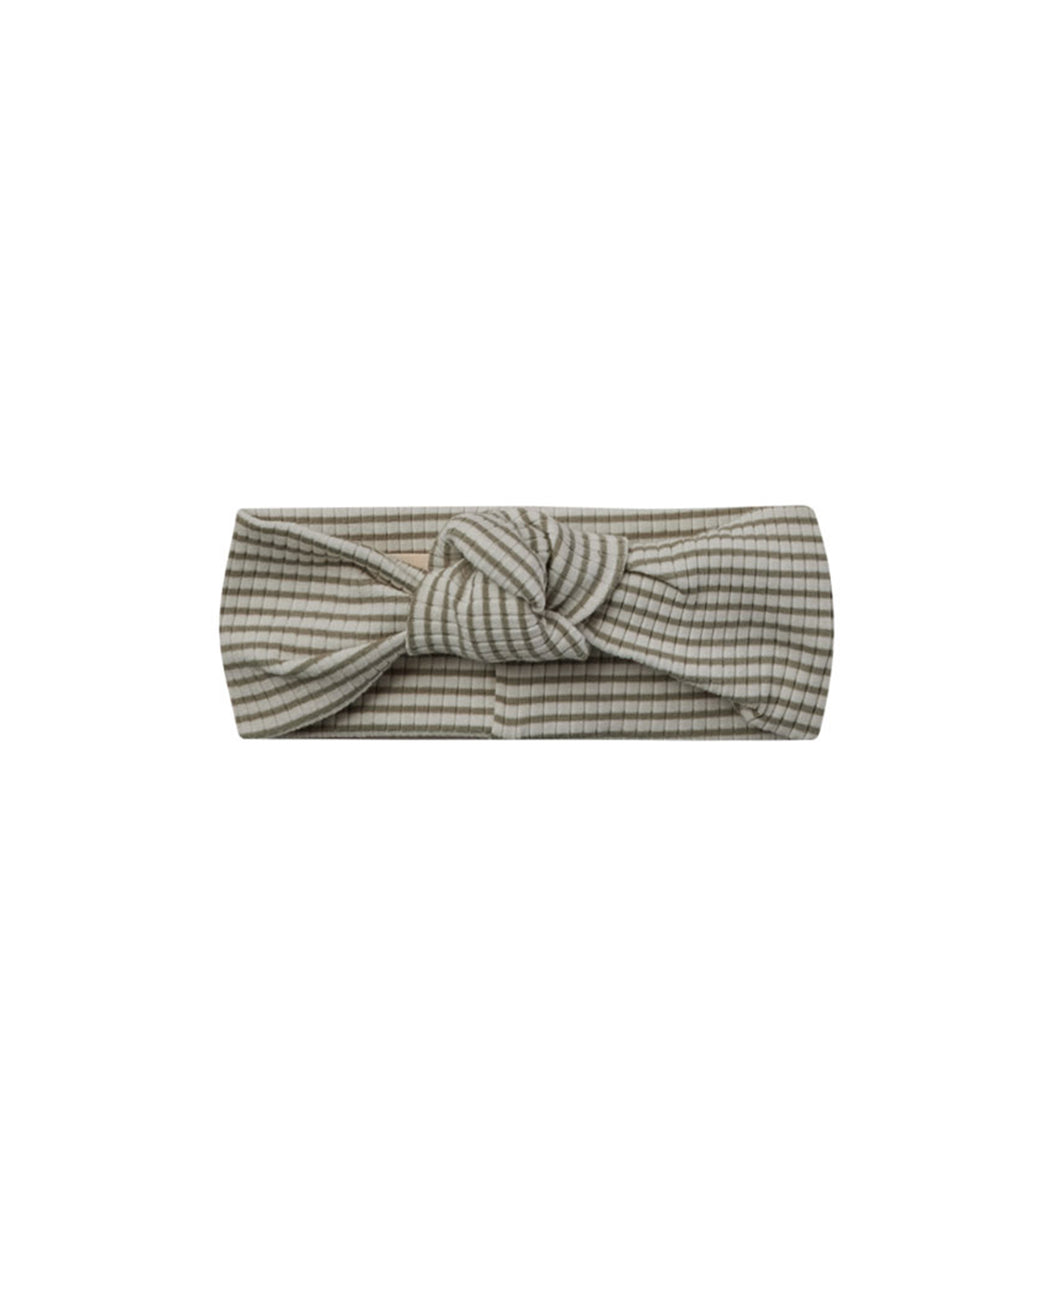 Knotted Headband – Fern Stripe